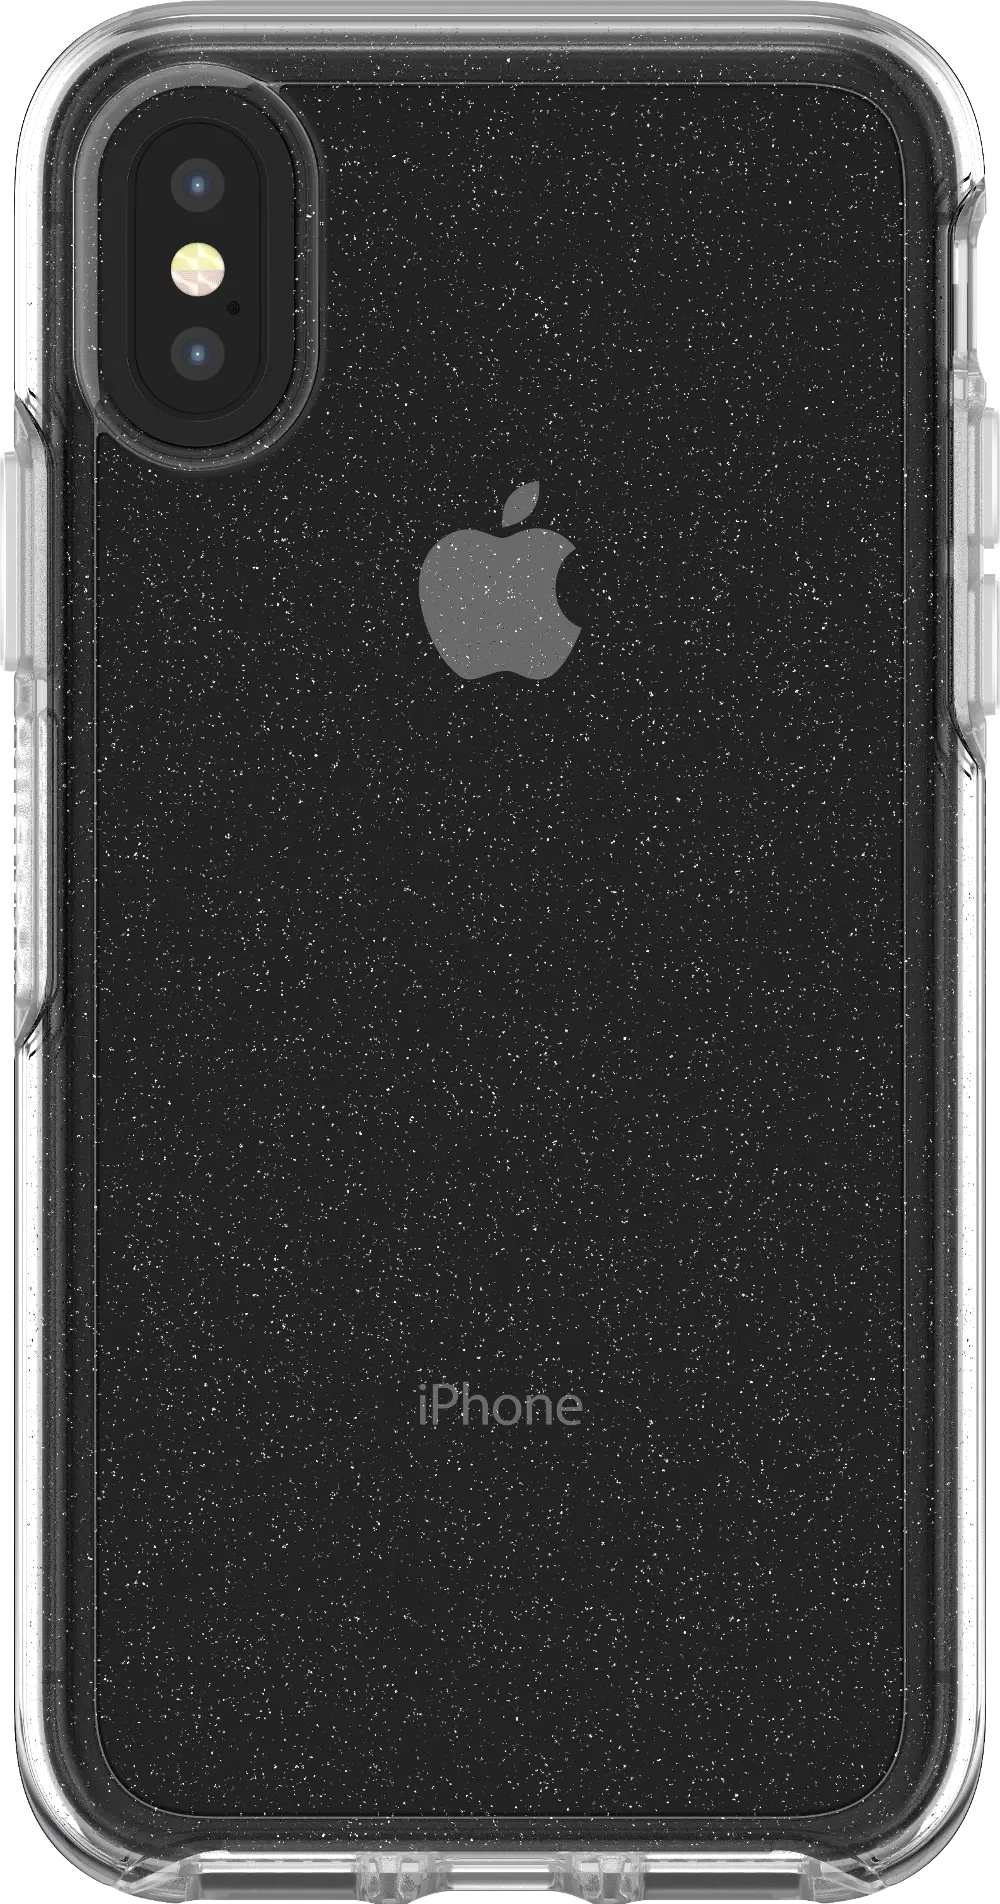 77-57120,S-IPX-STAR OtterBox Symmetry Startdust iPhone X Case-1